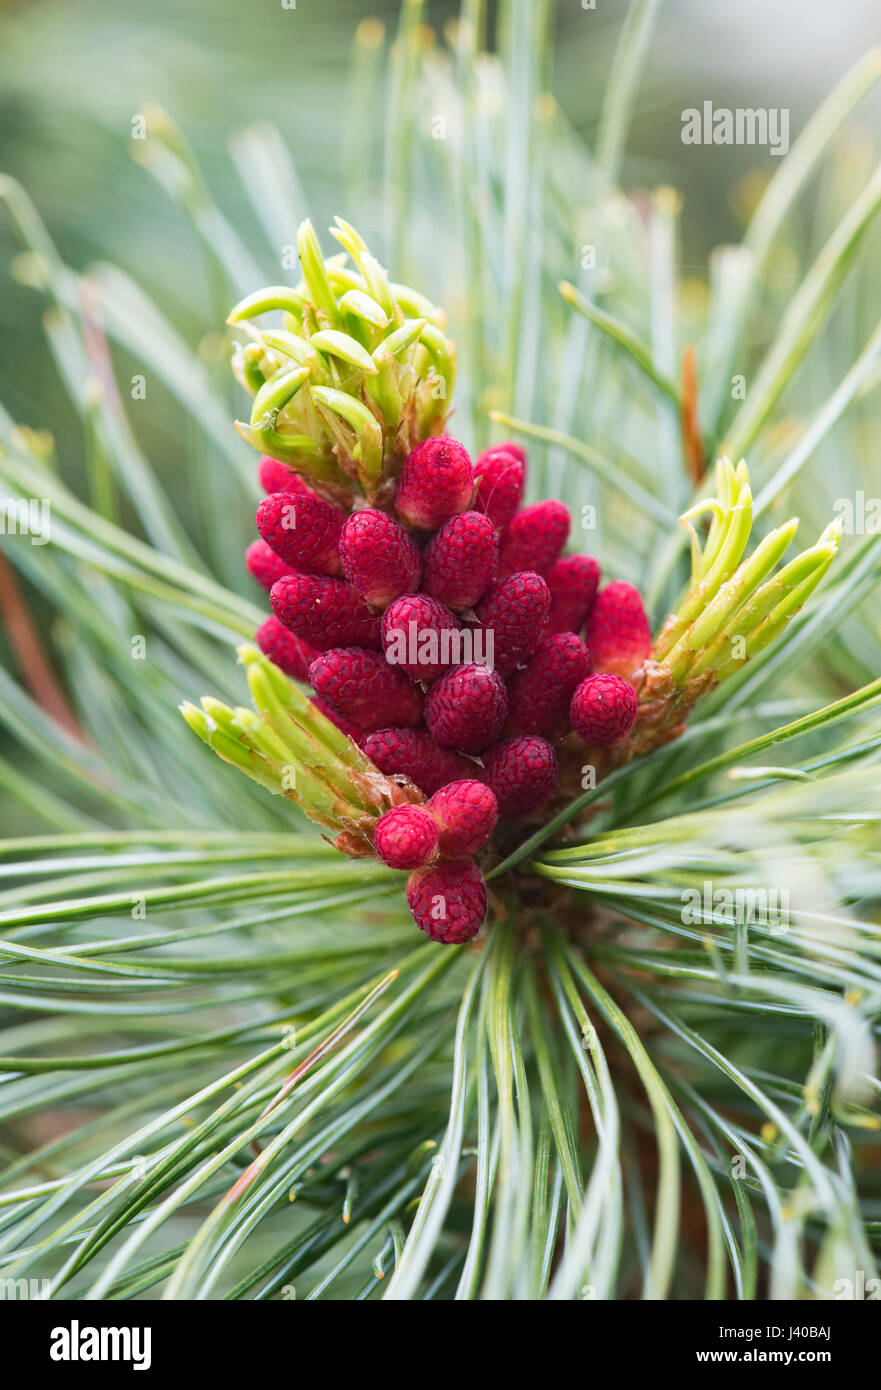 Pinus Pumila Draijers Dwarf. Draijers Dwarf Japanese Stone Pine flowering in april. UK Stock Photo